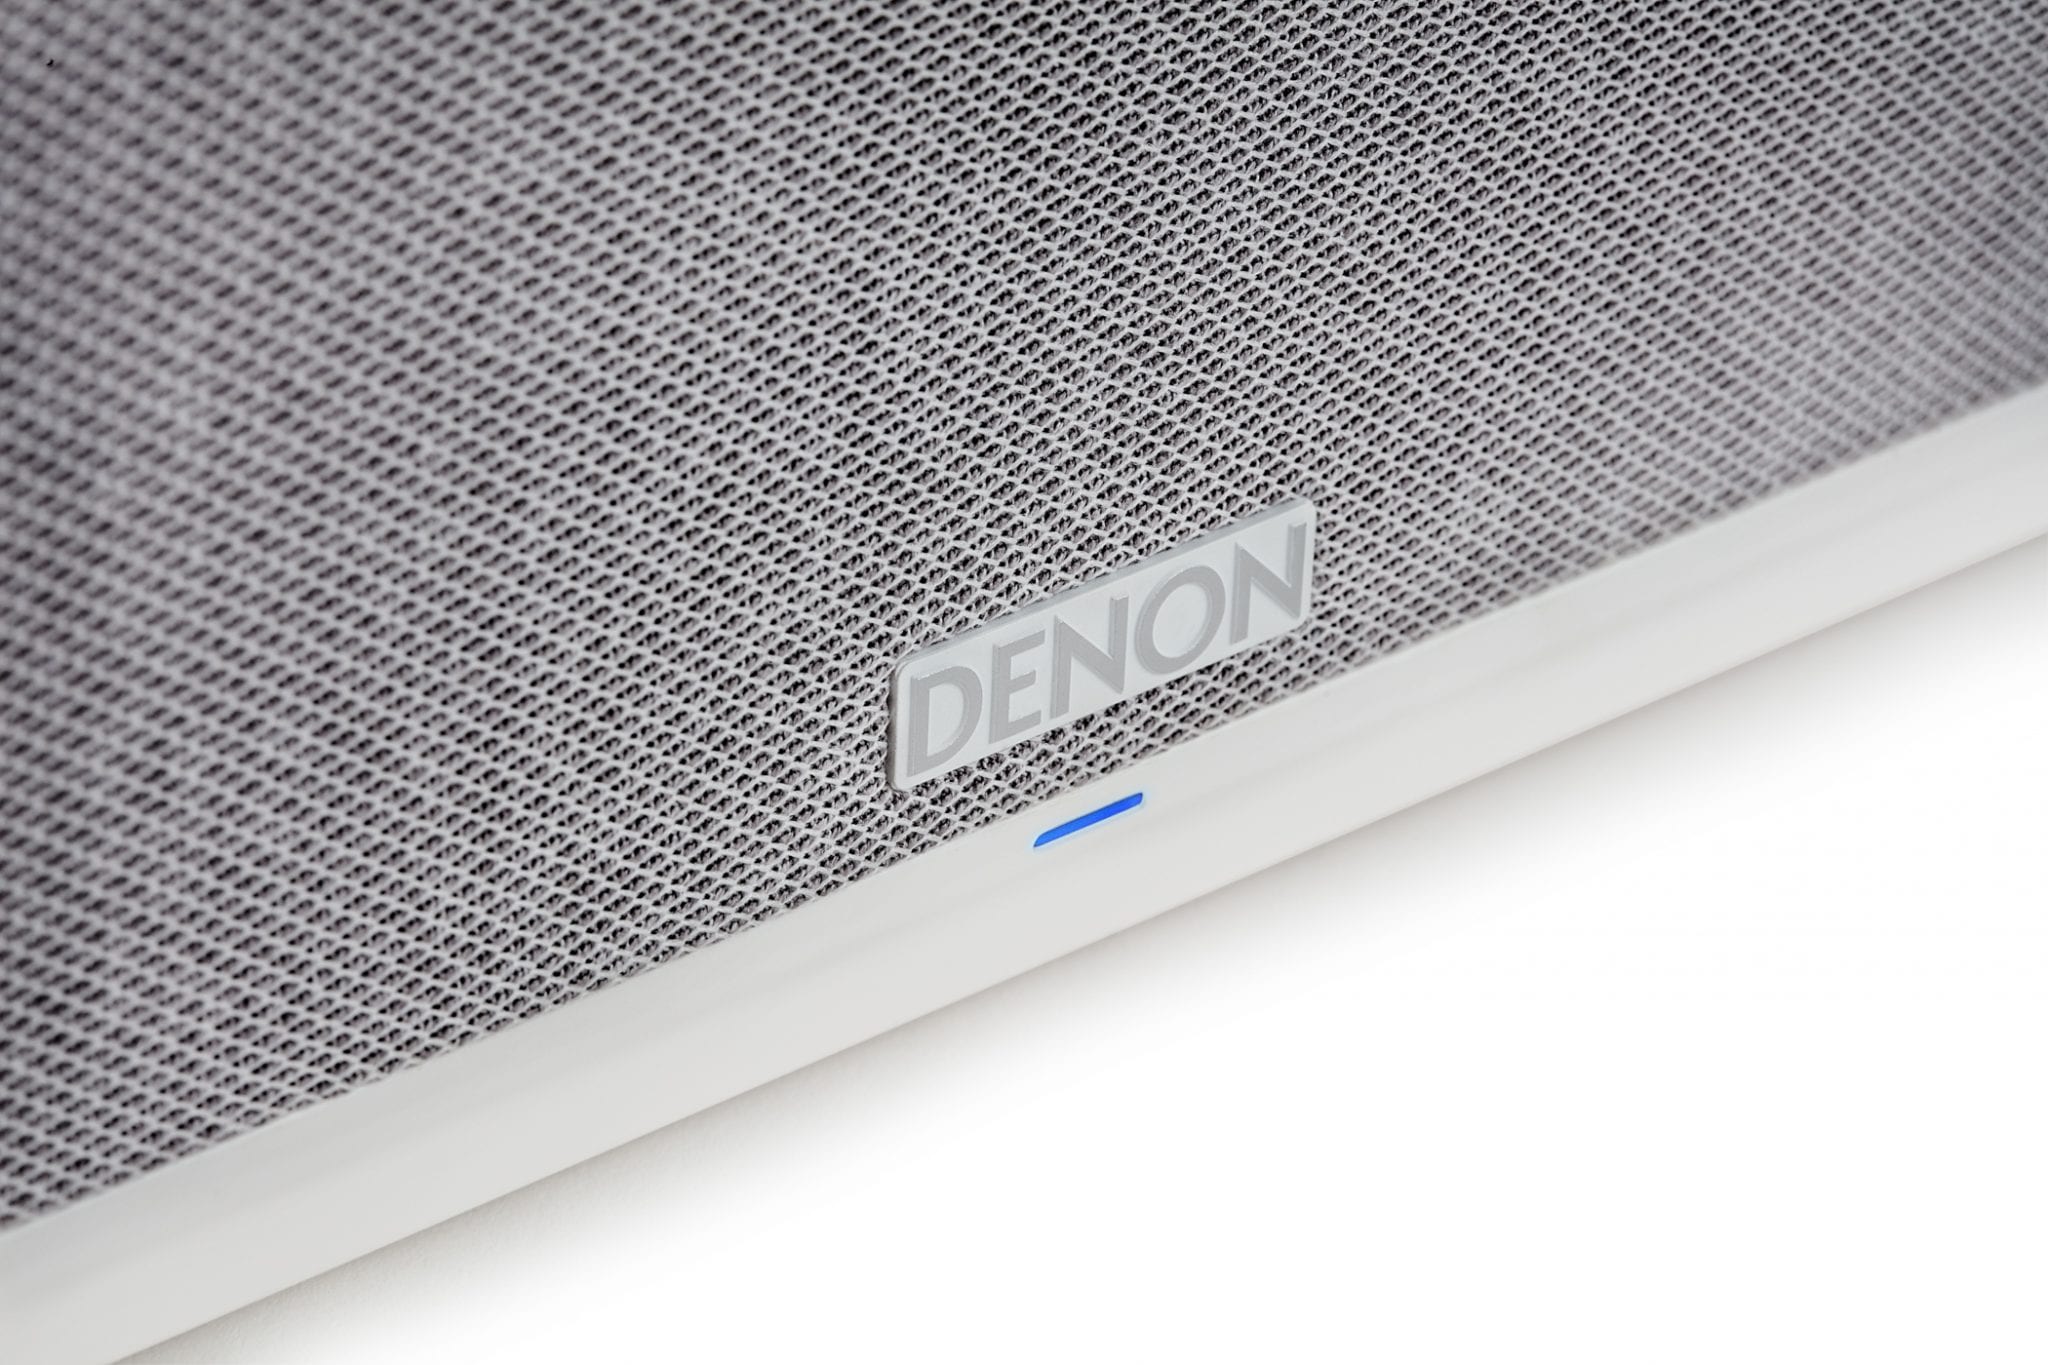 Denon Home 250 wit - Wifi speaker